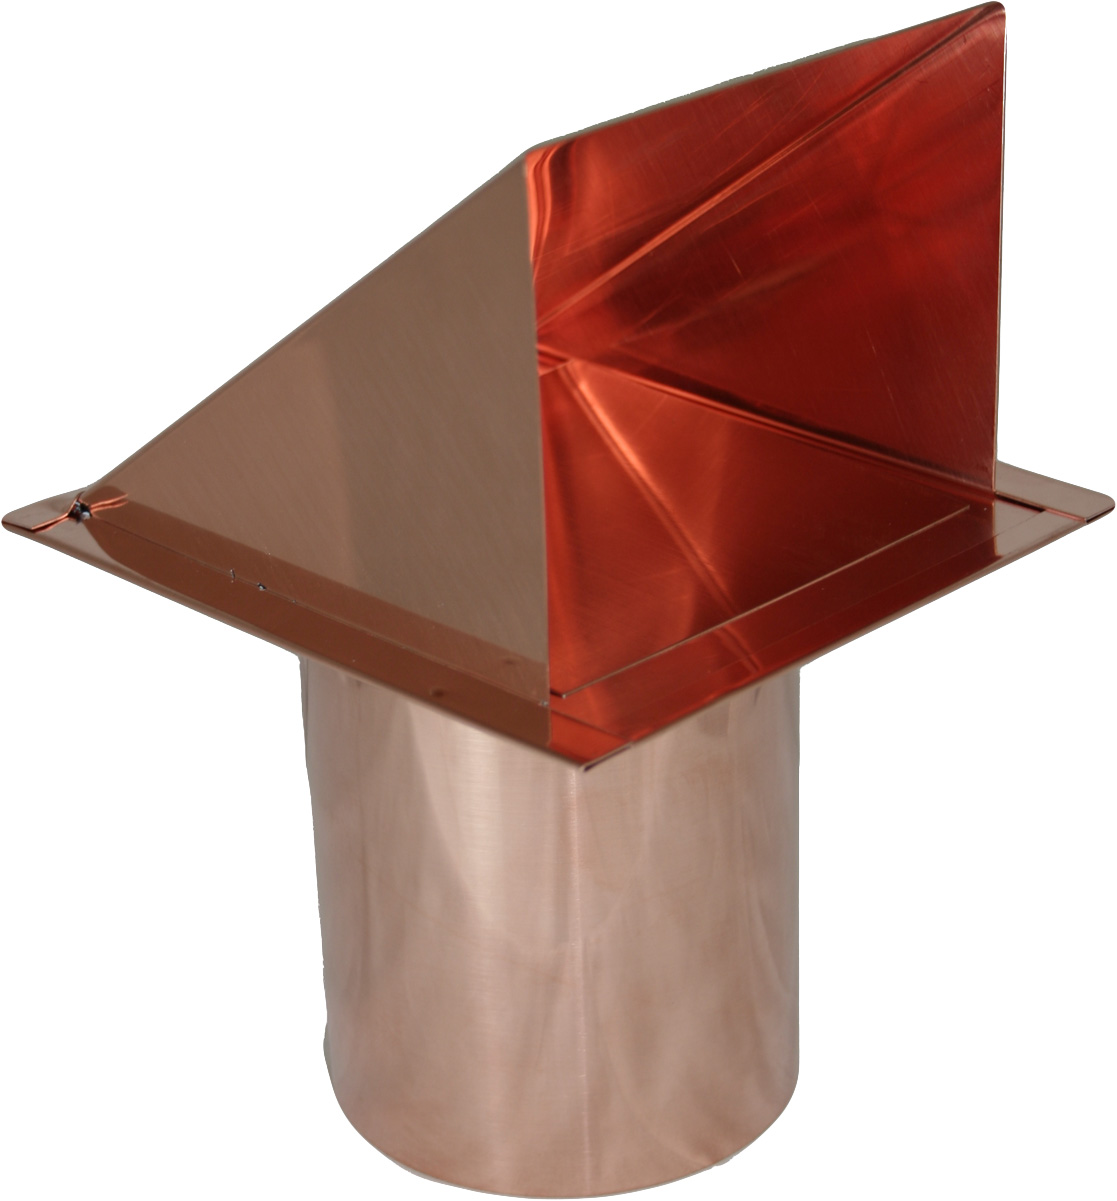 copper 4 inch dryer vent cap with damper